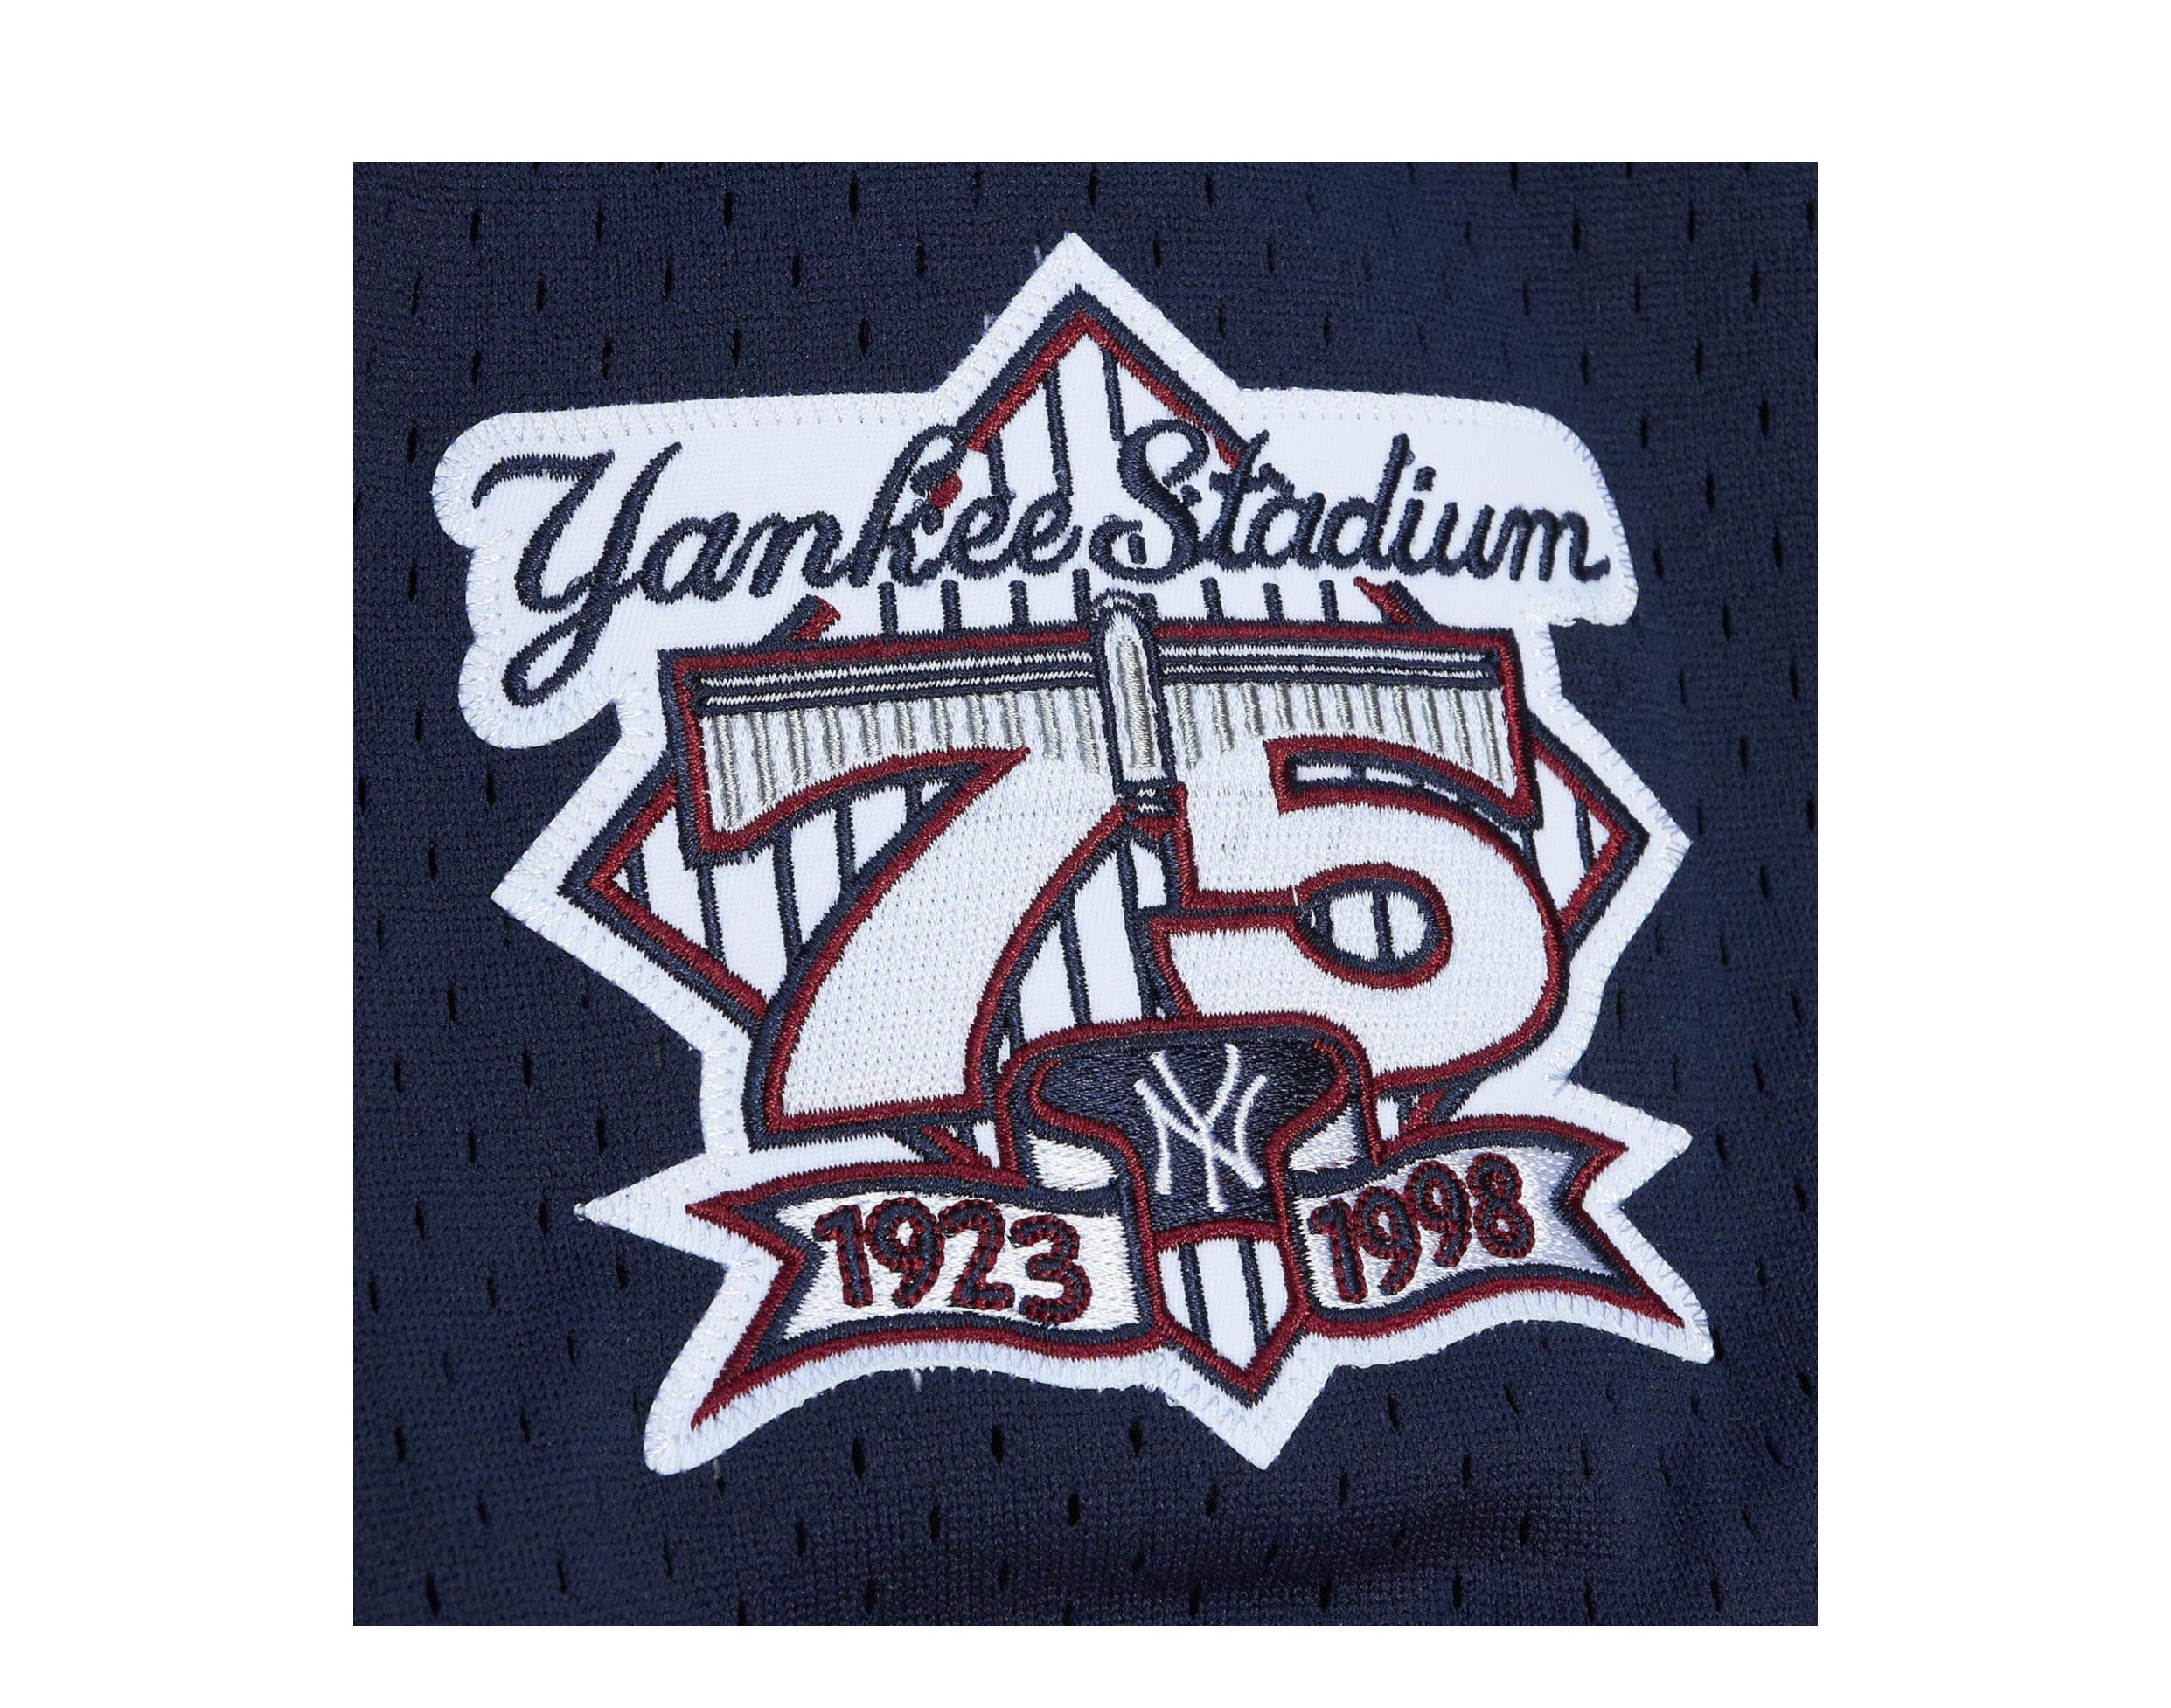 Men's New York Yankees Derek Jeter Mitchell & Ness Navy Batting Practi